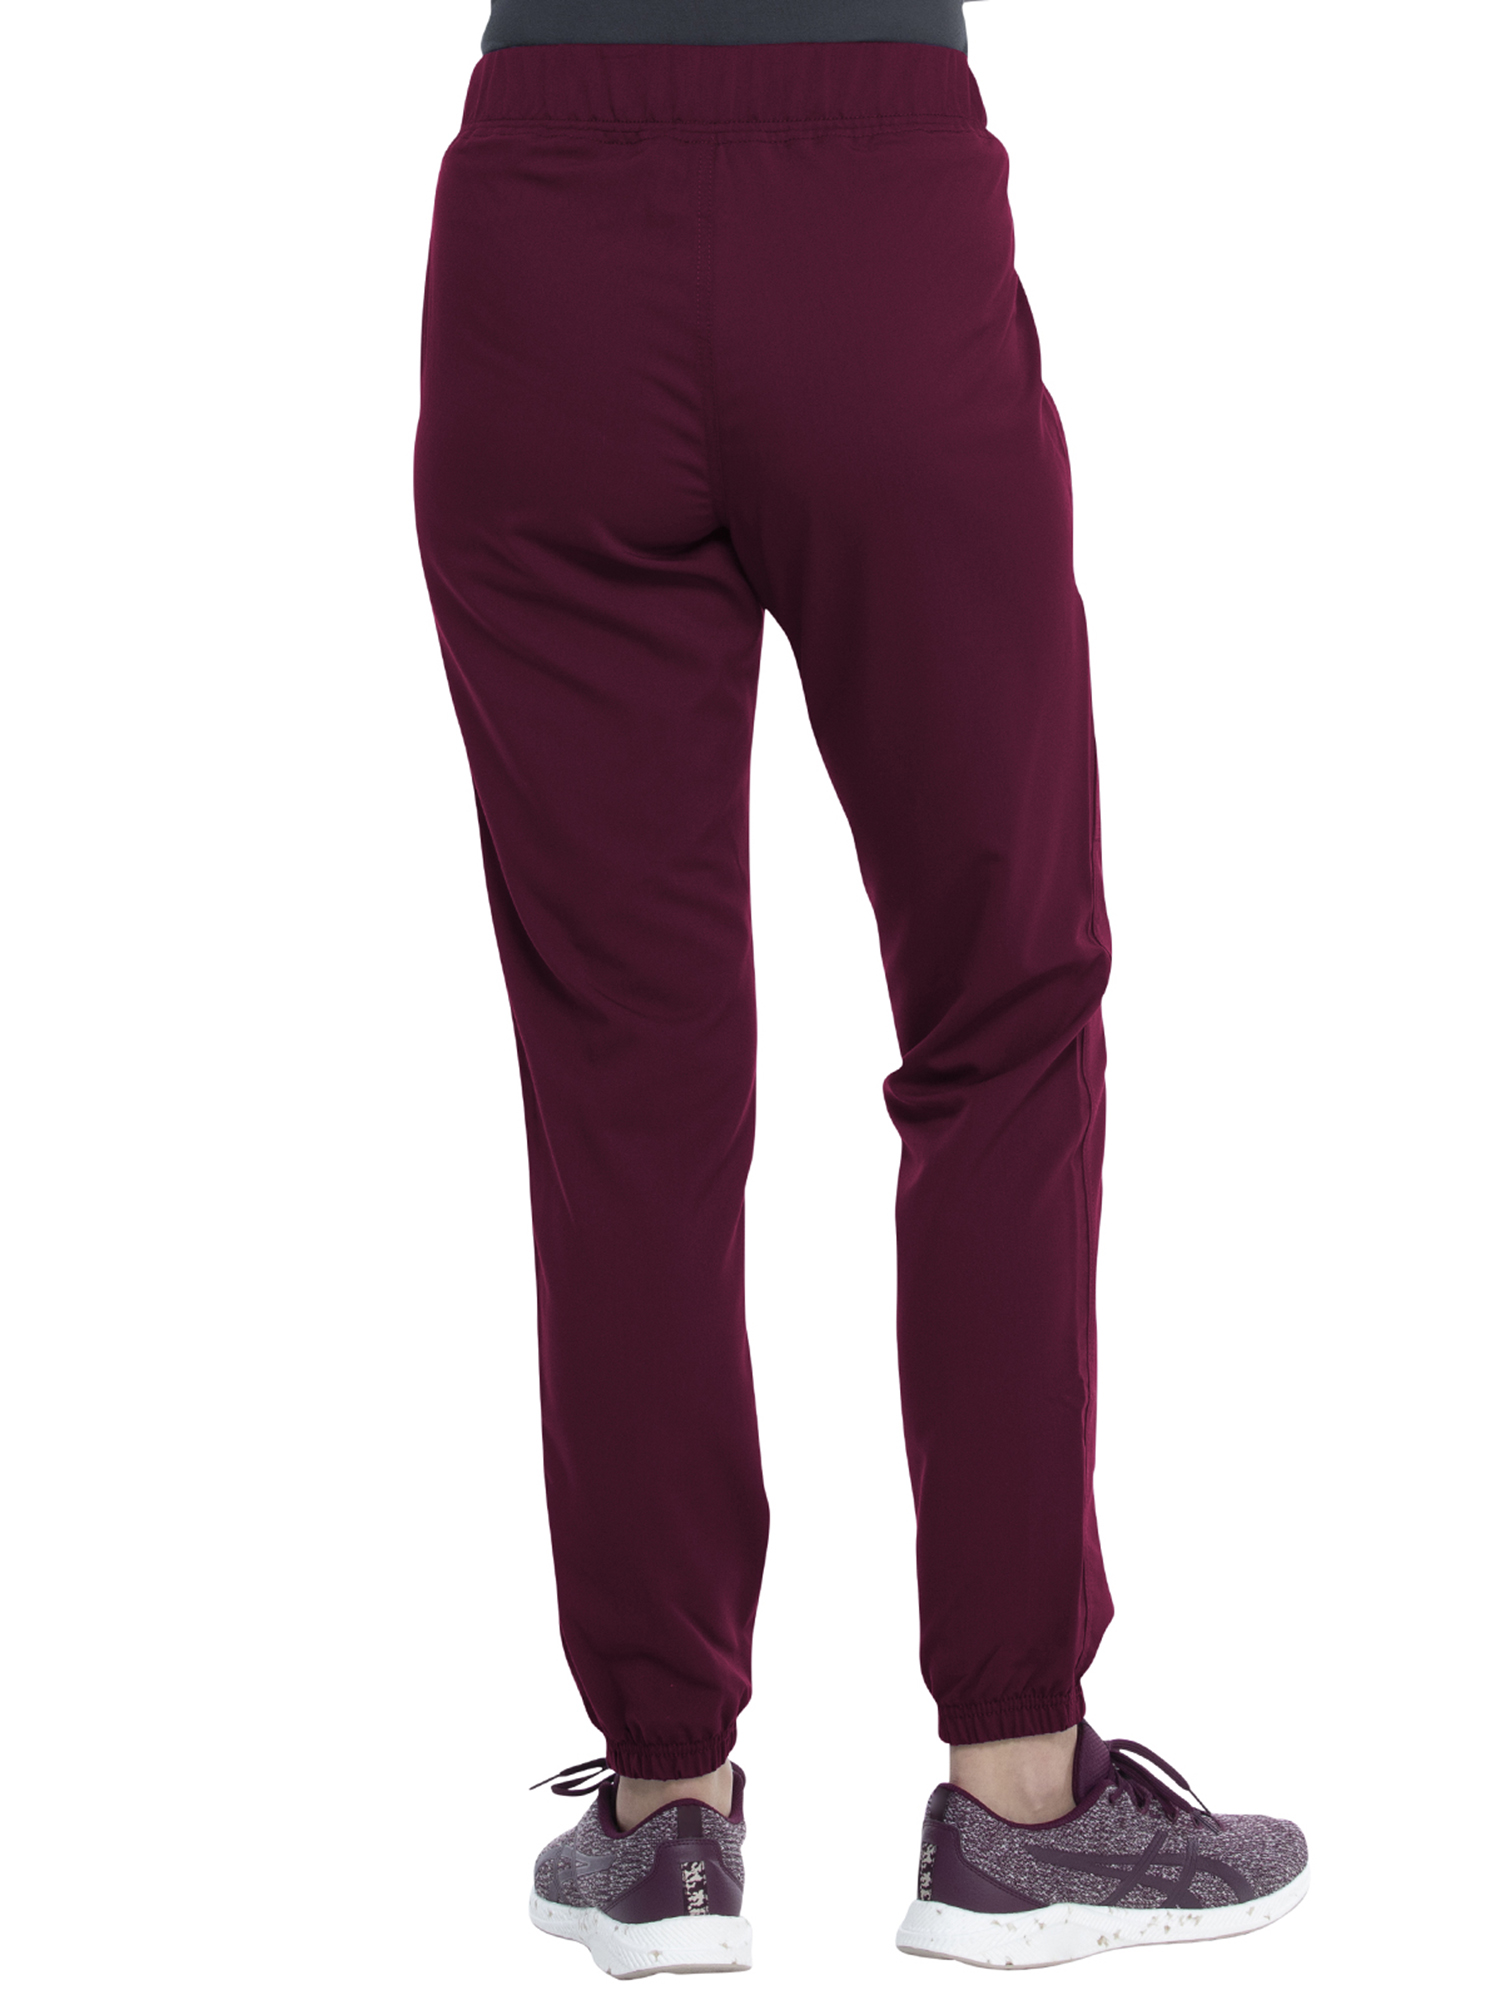 Scrubstar Women's Fashion Premium Ultimate Jogger Scrub Pants - Walmart.com